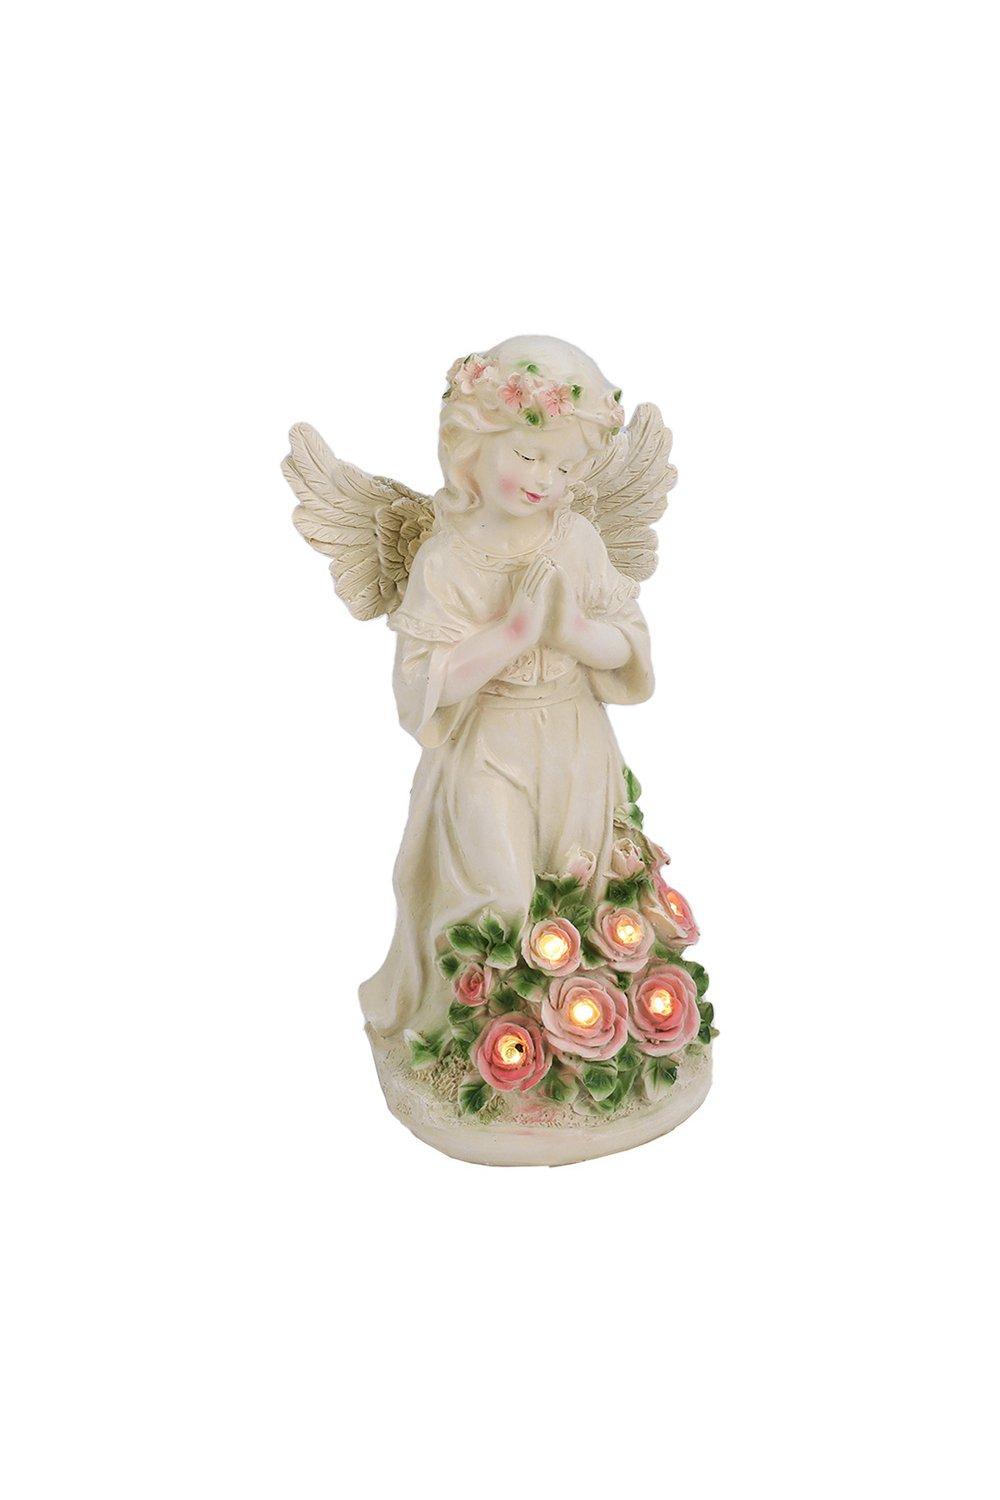 Angel Fairy Garden Ornament Resin Statue Figurine Lawn Decor